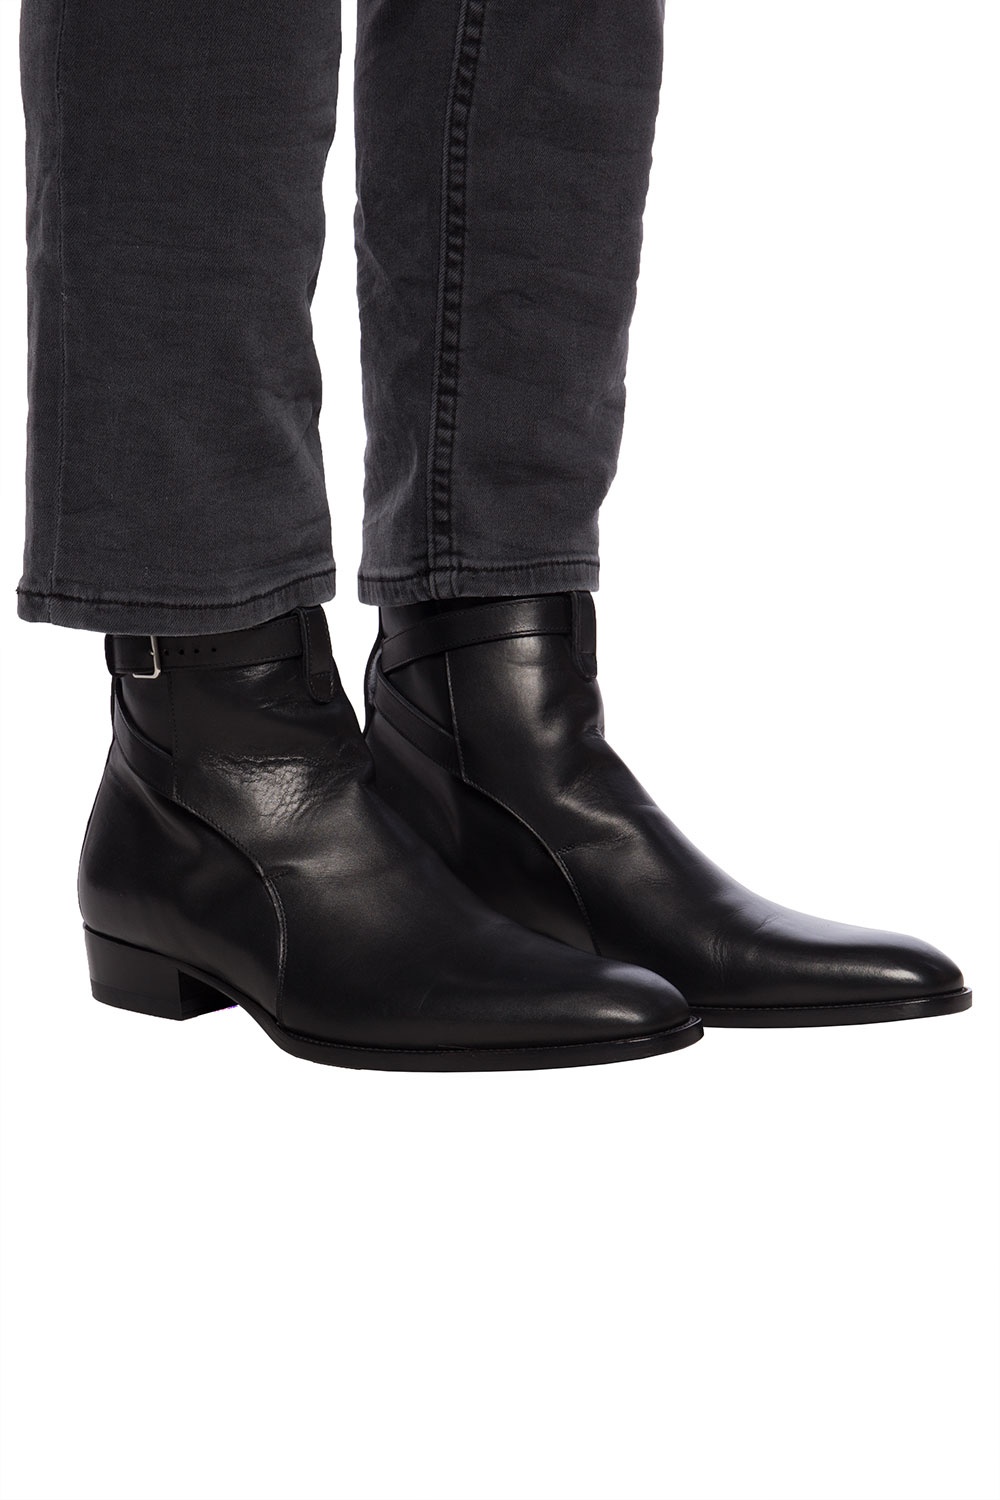 Wyatt Jodhpur' leather ankle boots Saint Laurent - Vitkac Canada